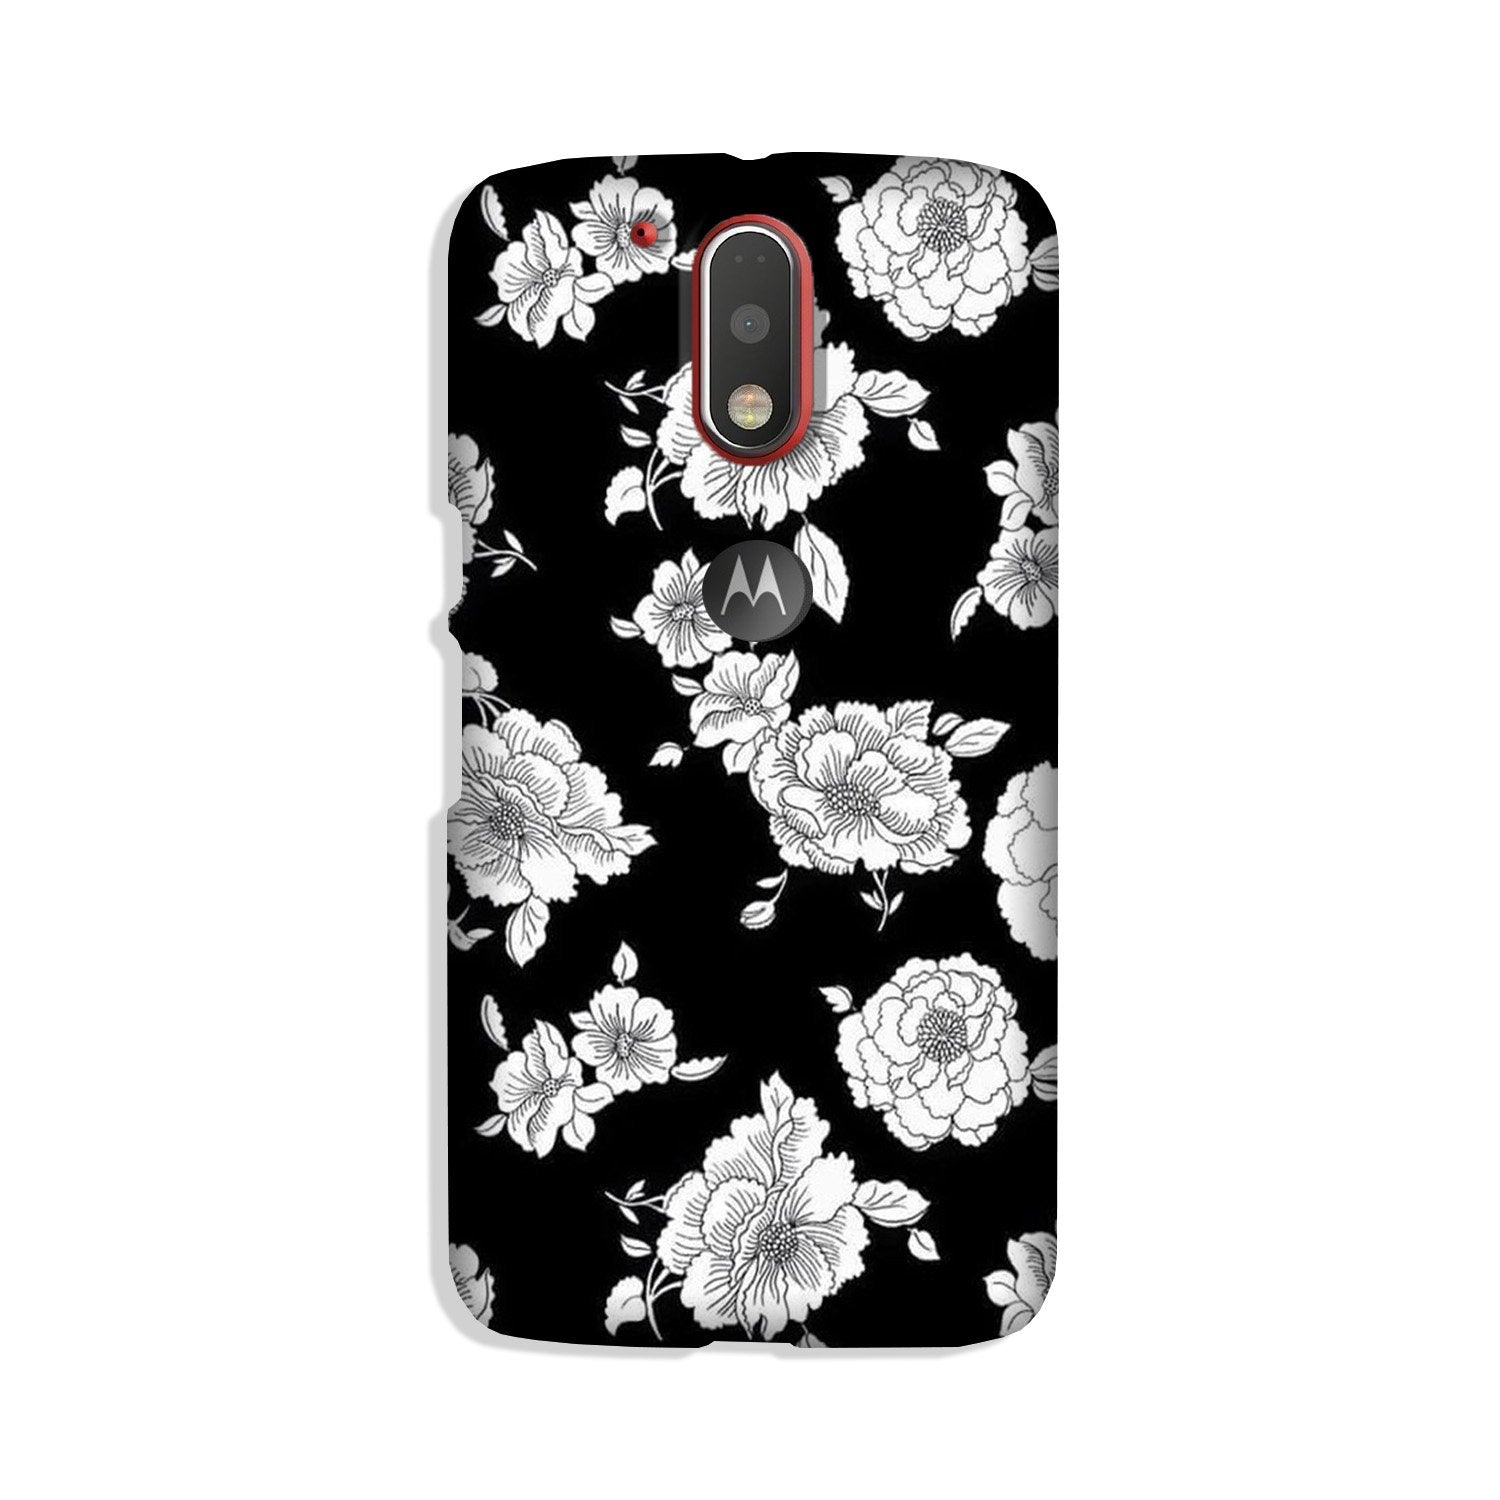 White flowers Black Background Case for Moto G4 Plus